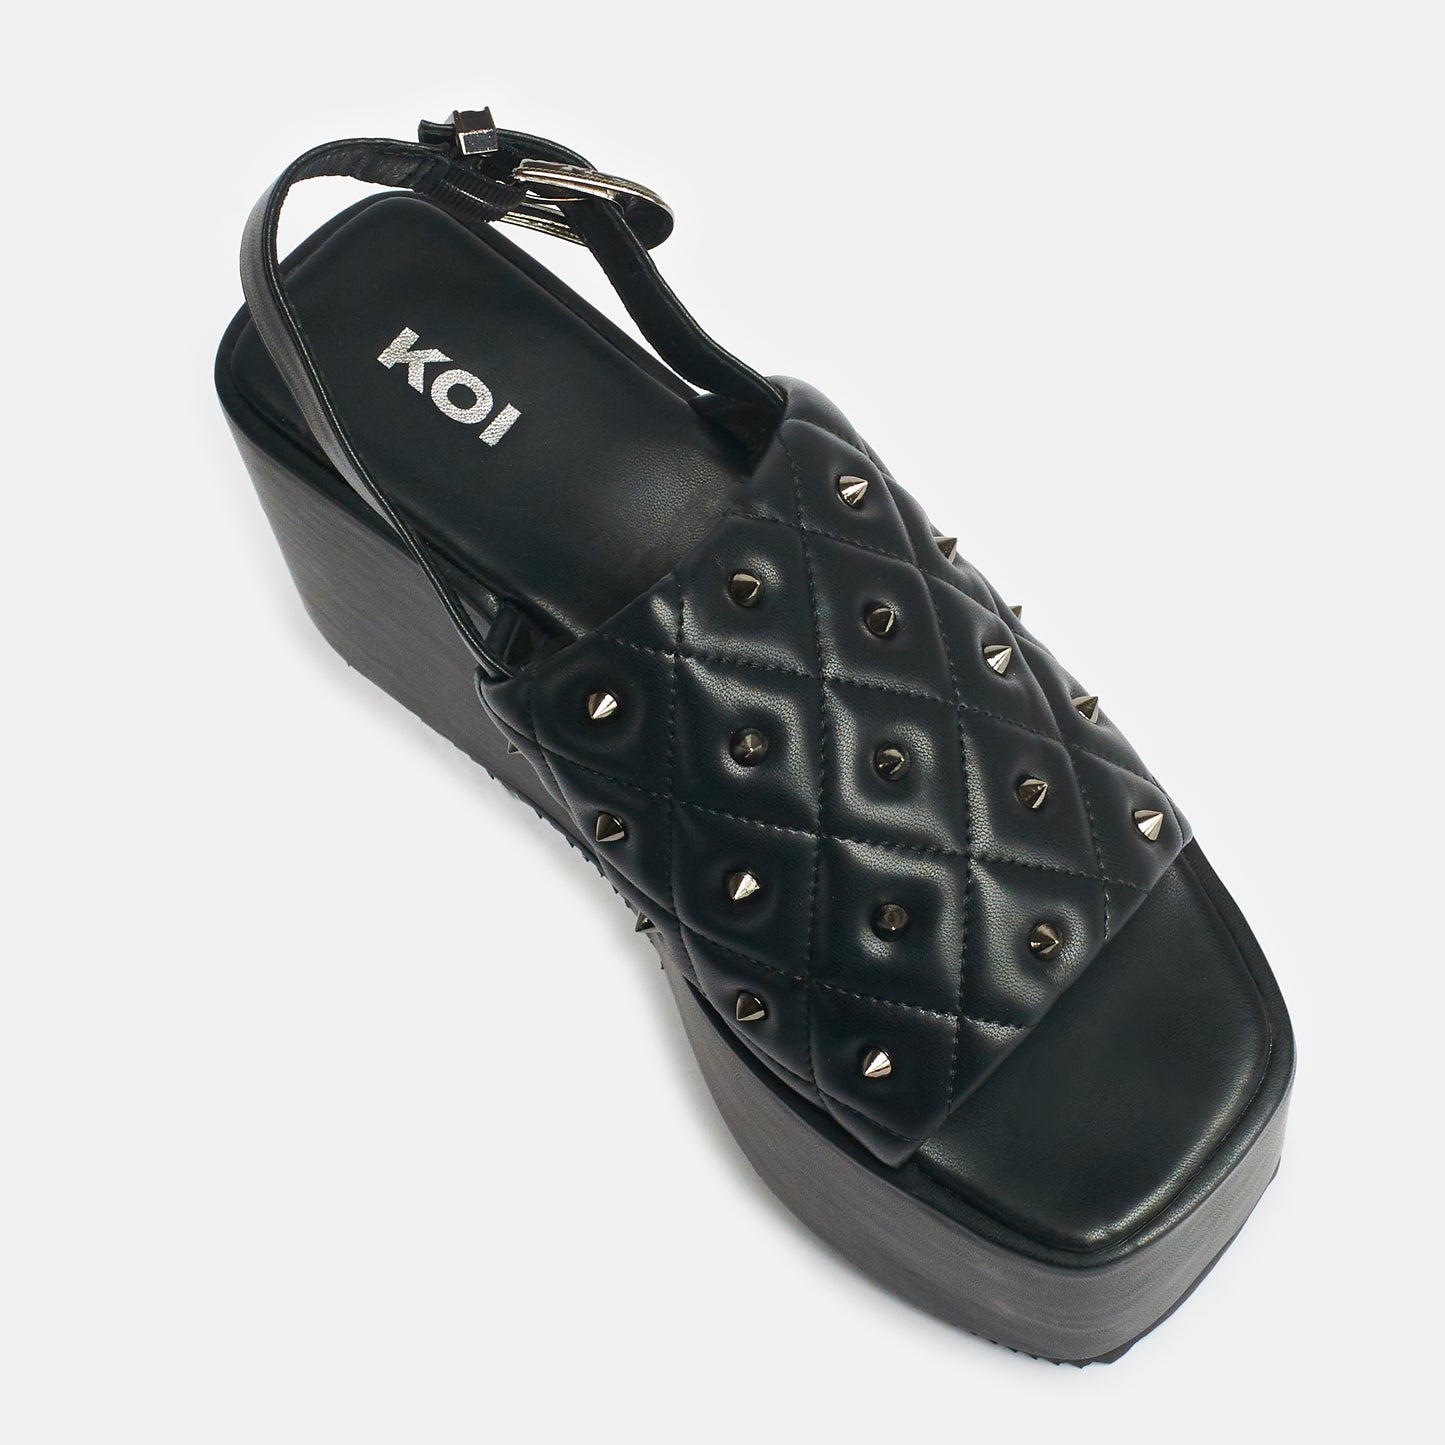 Imperial Web Mega Platform Sandals - Sandals - KOI Footwear - Black - Top View